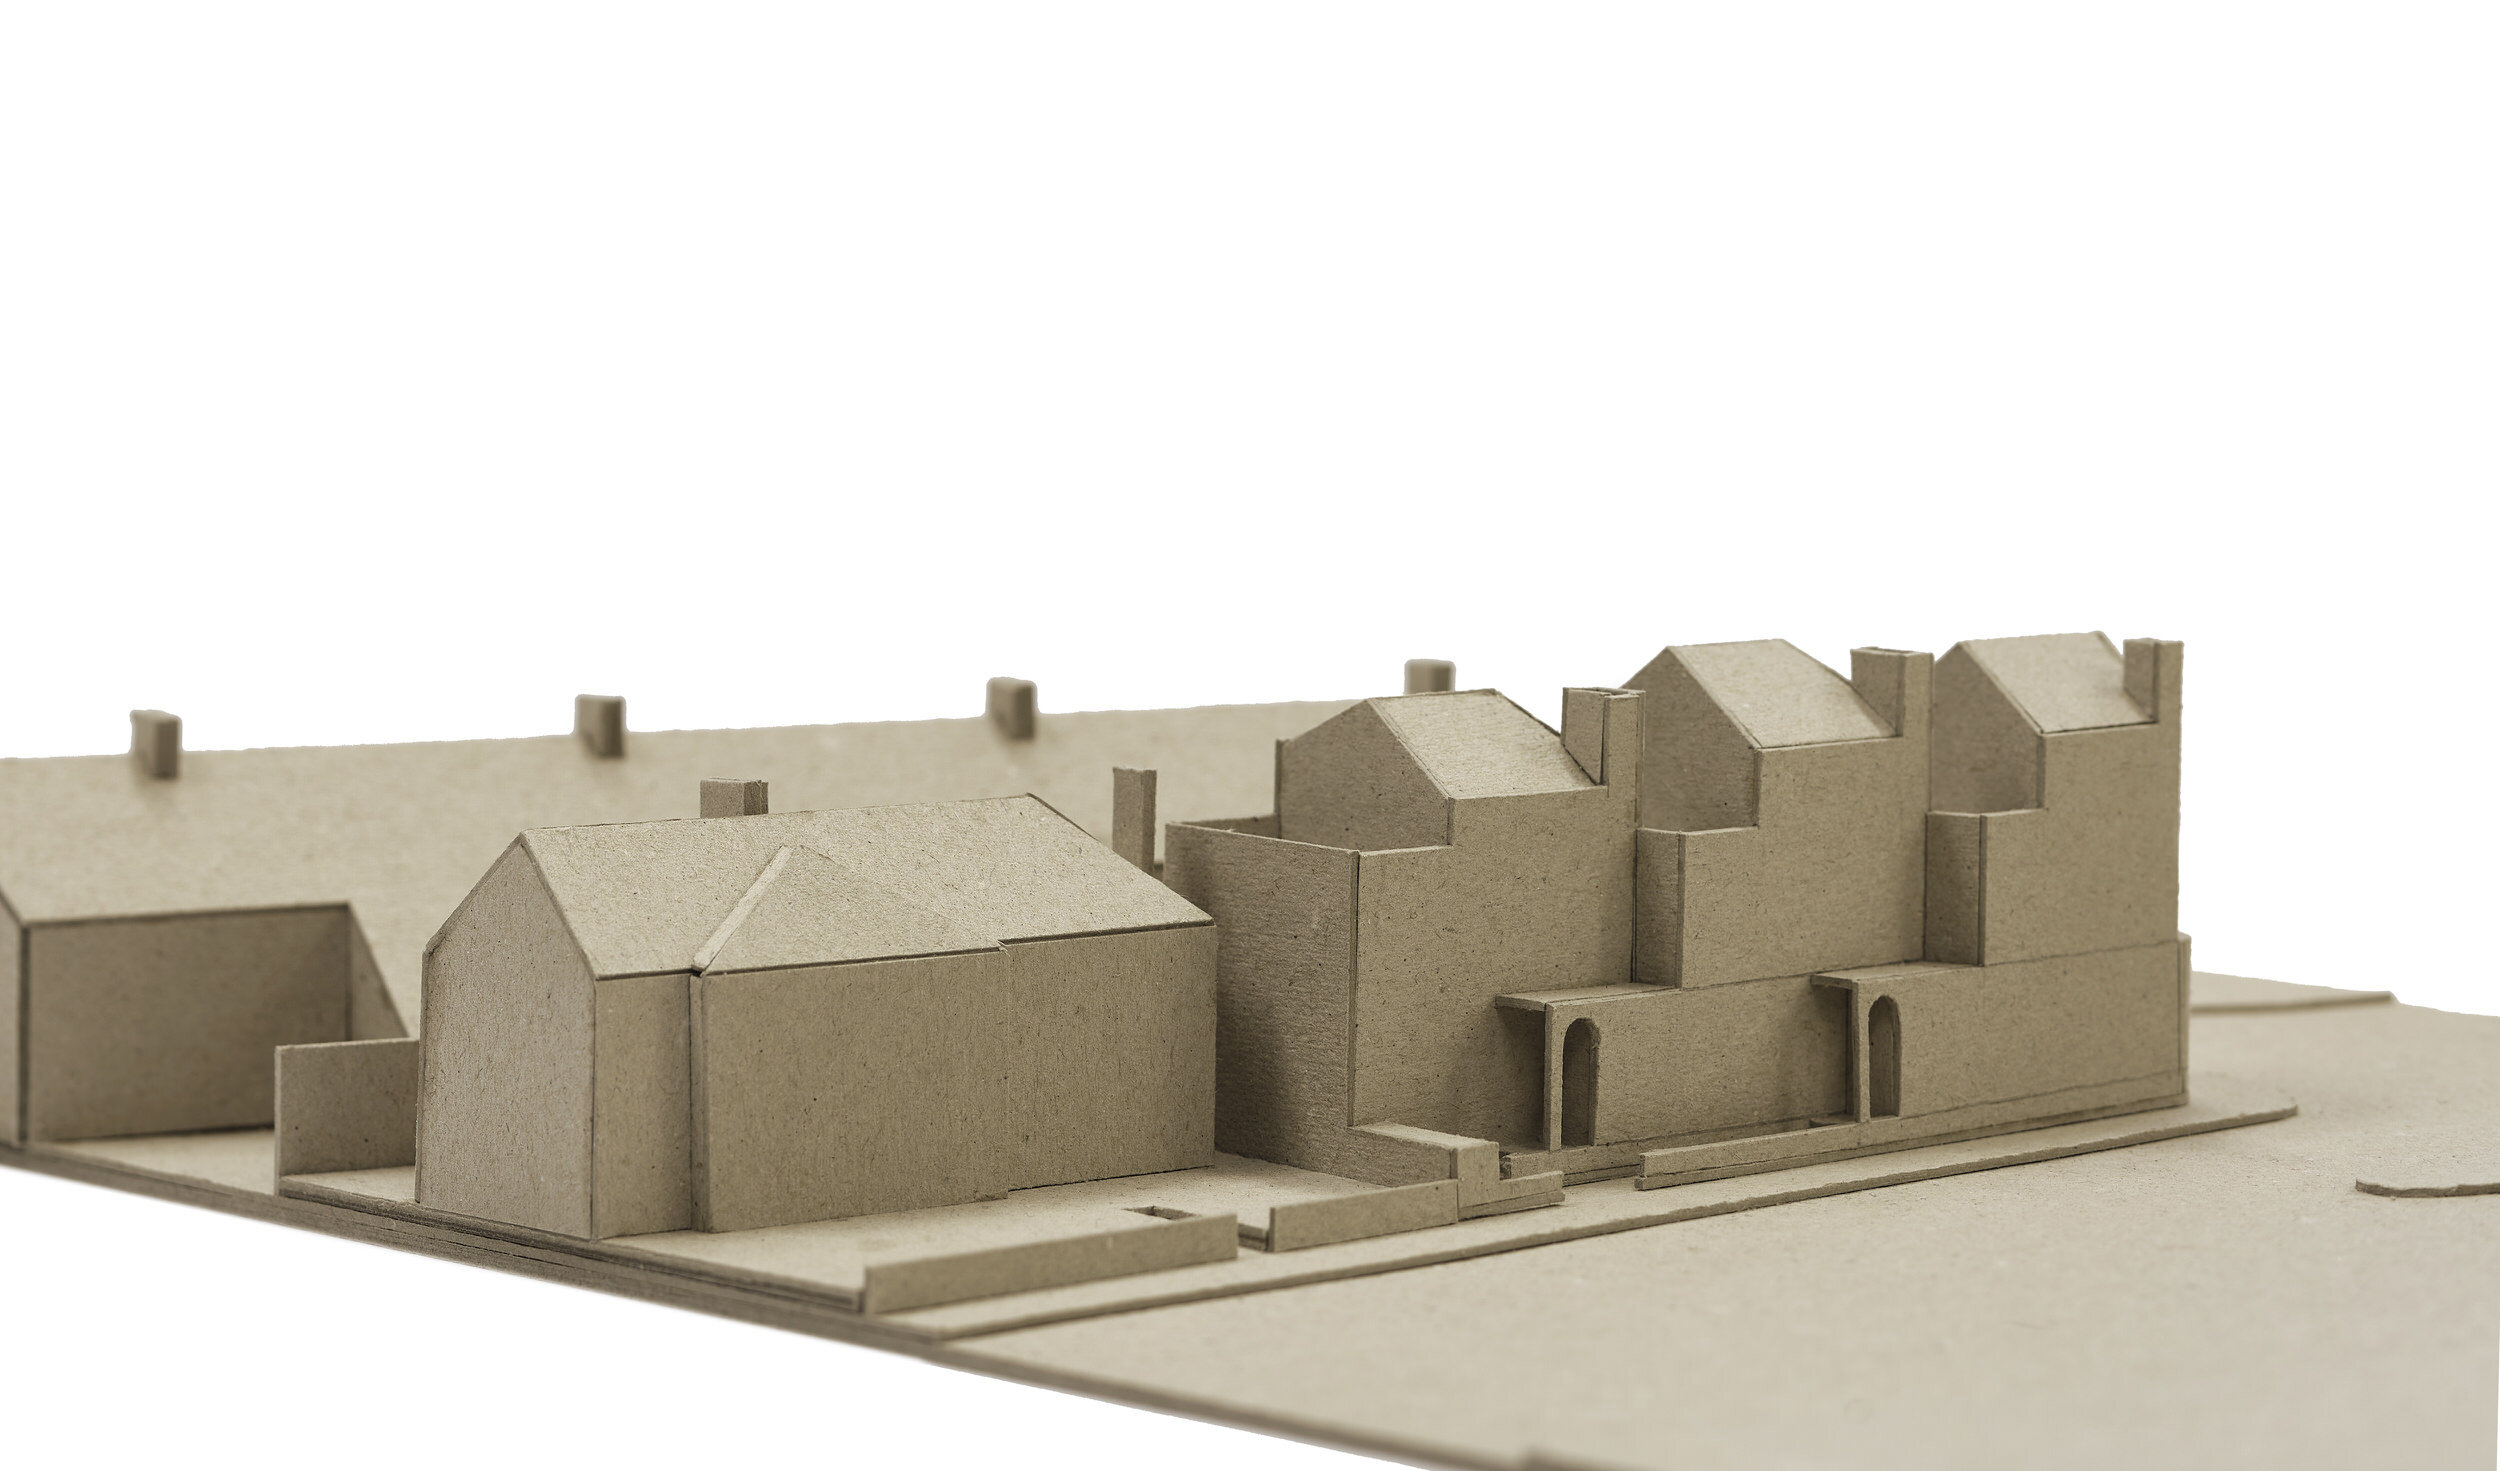 Dublin-Architects-Contemporary-Housing-Model.jpg